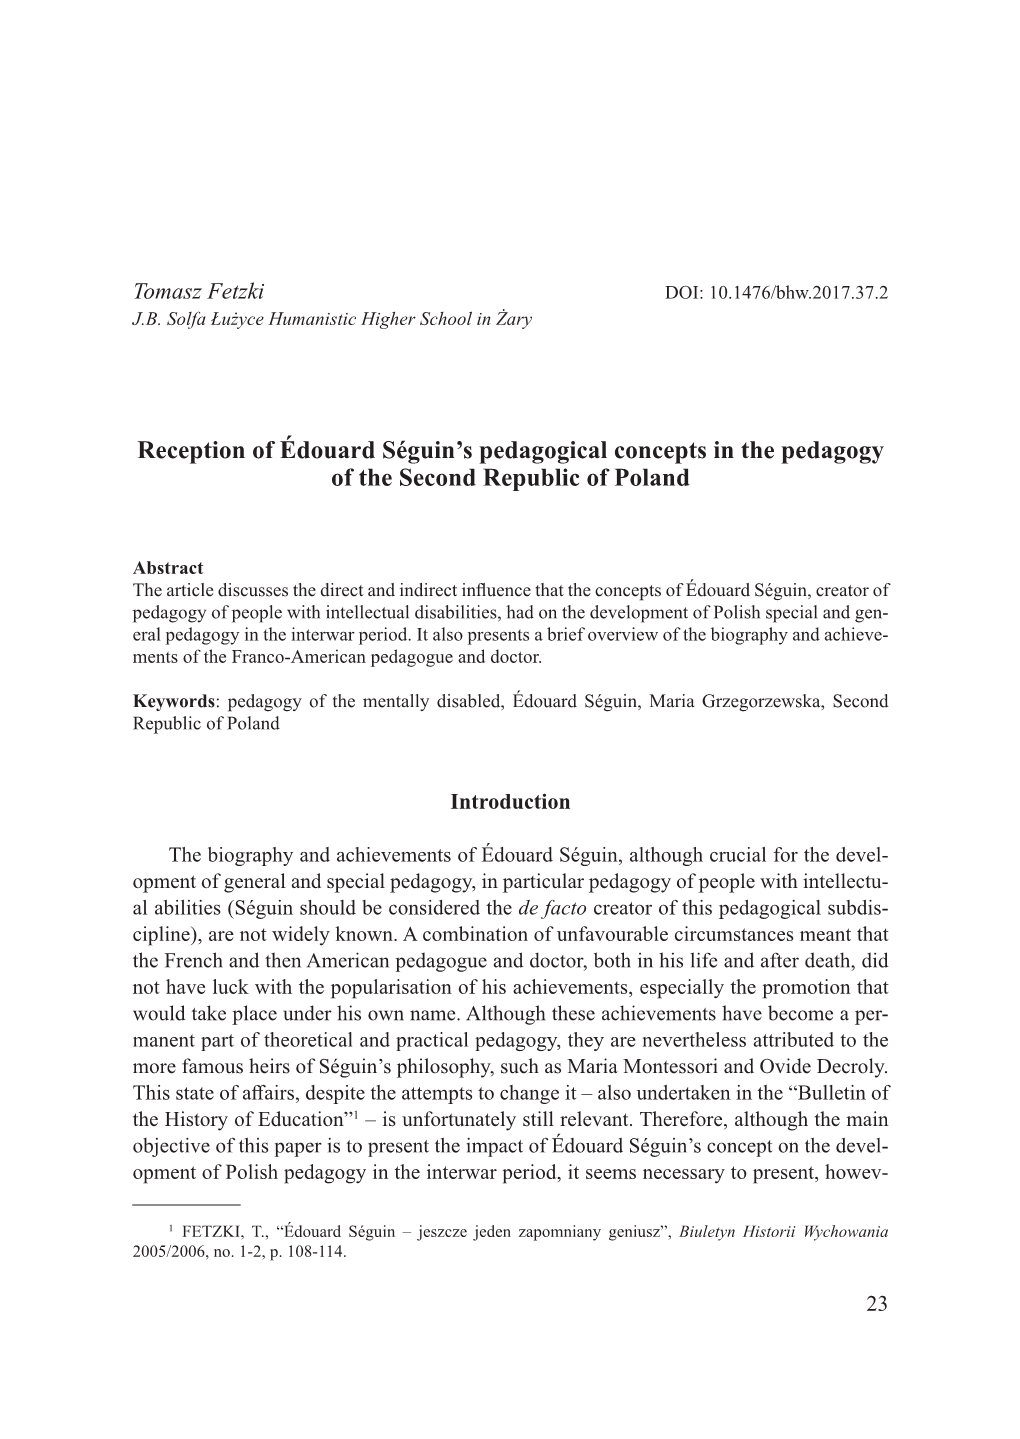 Reception of Édouard Séguin's Pedagogical Concepts in the Pedagogy of the Second Republic of Poland